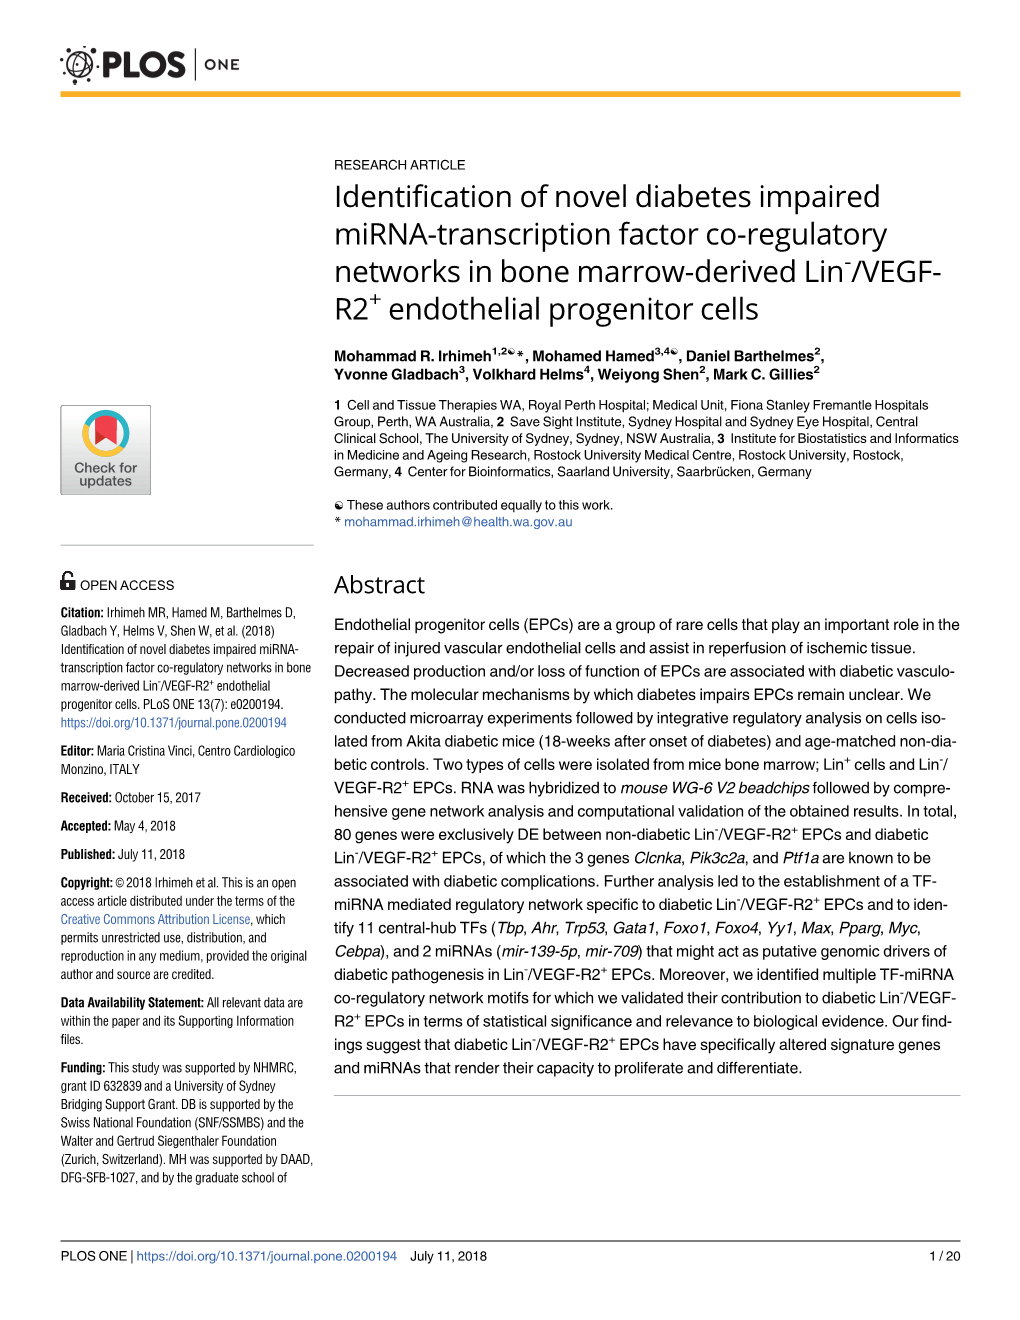 Identification of Novel Diabetes Impaired Mirna-Transcription Factor Co-Regulatory Networks in Bone Marrow-Derived Lin-/VEGF- R2+ Endothelial Progenitor Cells